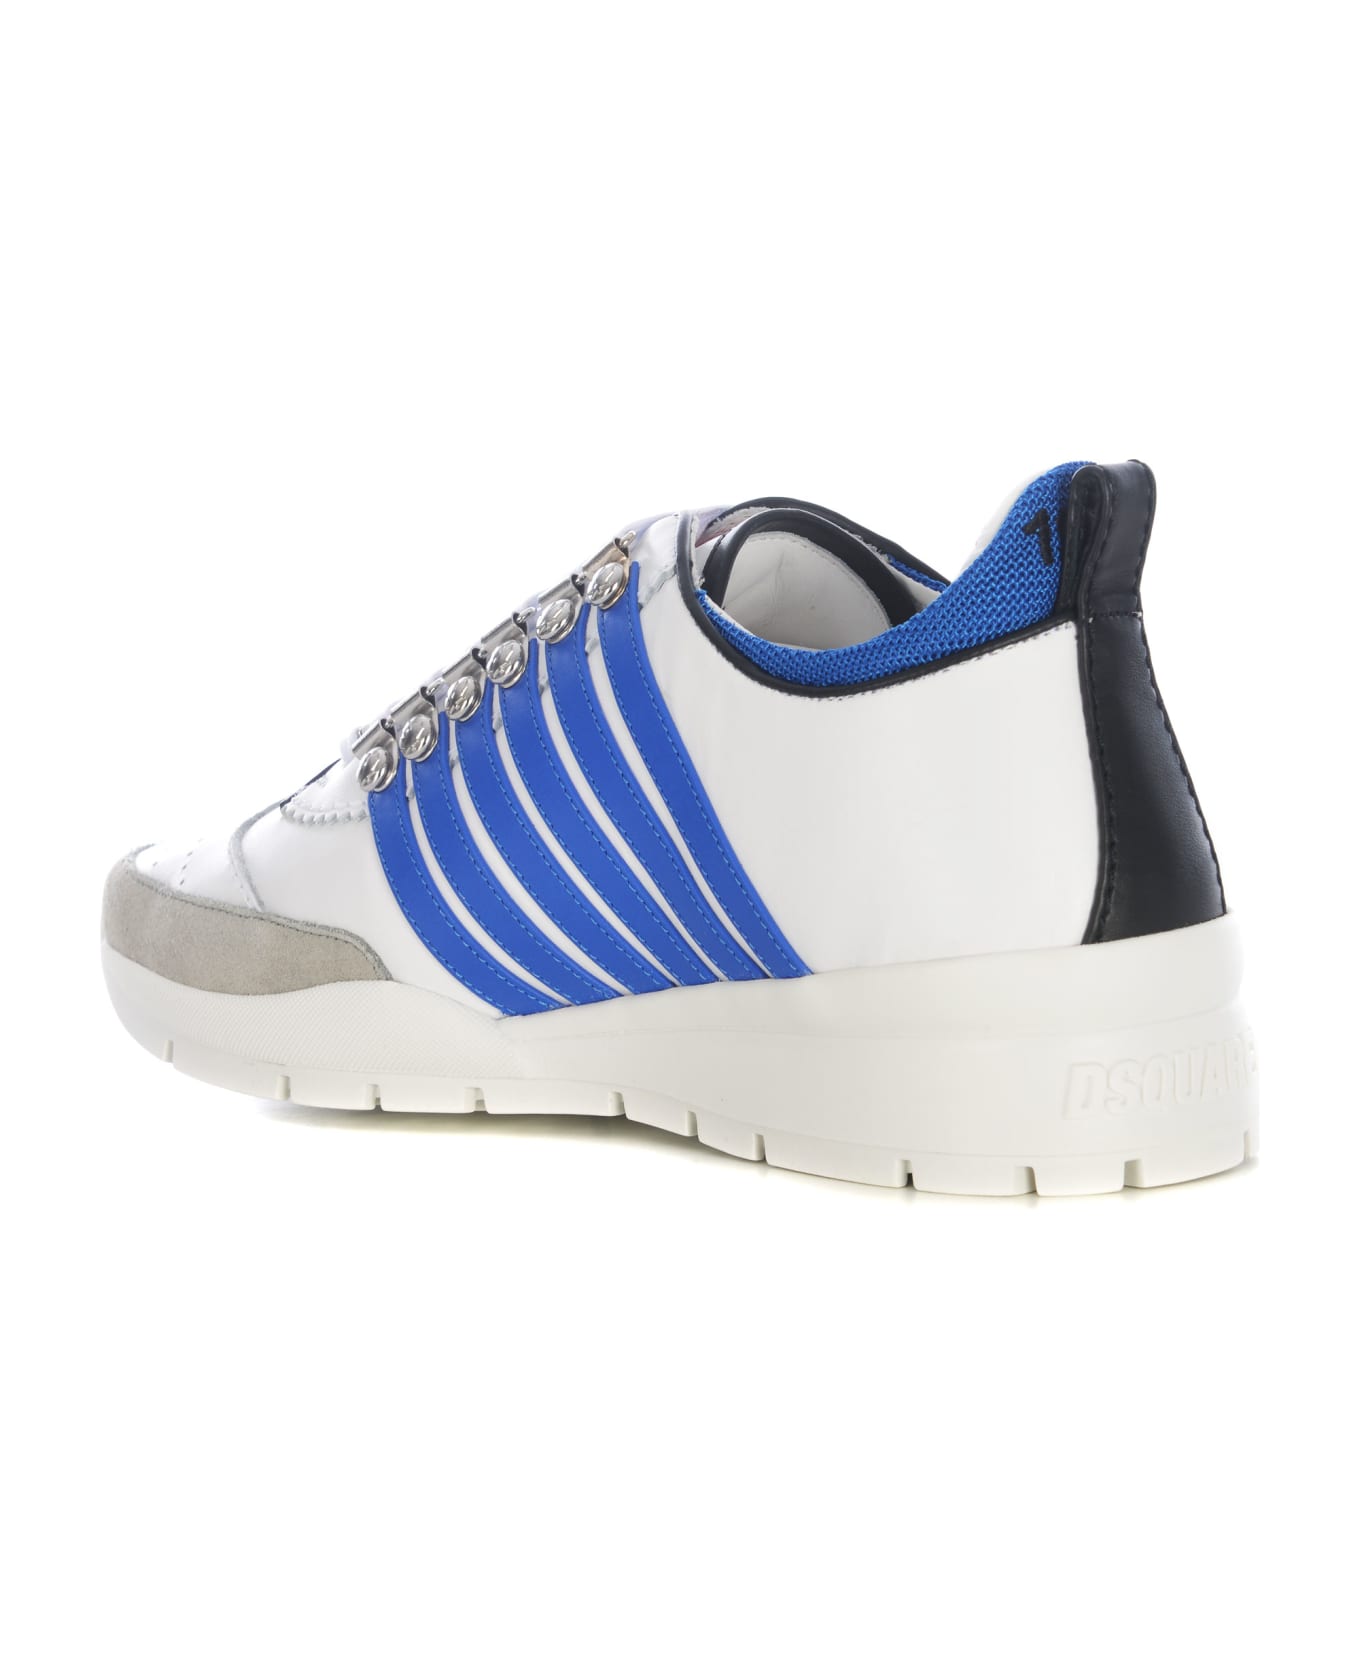 Dsquared2 Legendary Striped Almond Toe Sneakers - Bianco/azzurro スニーカー